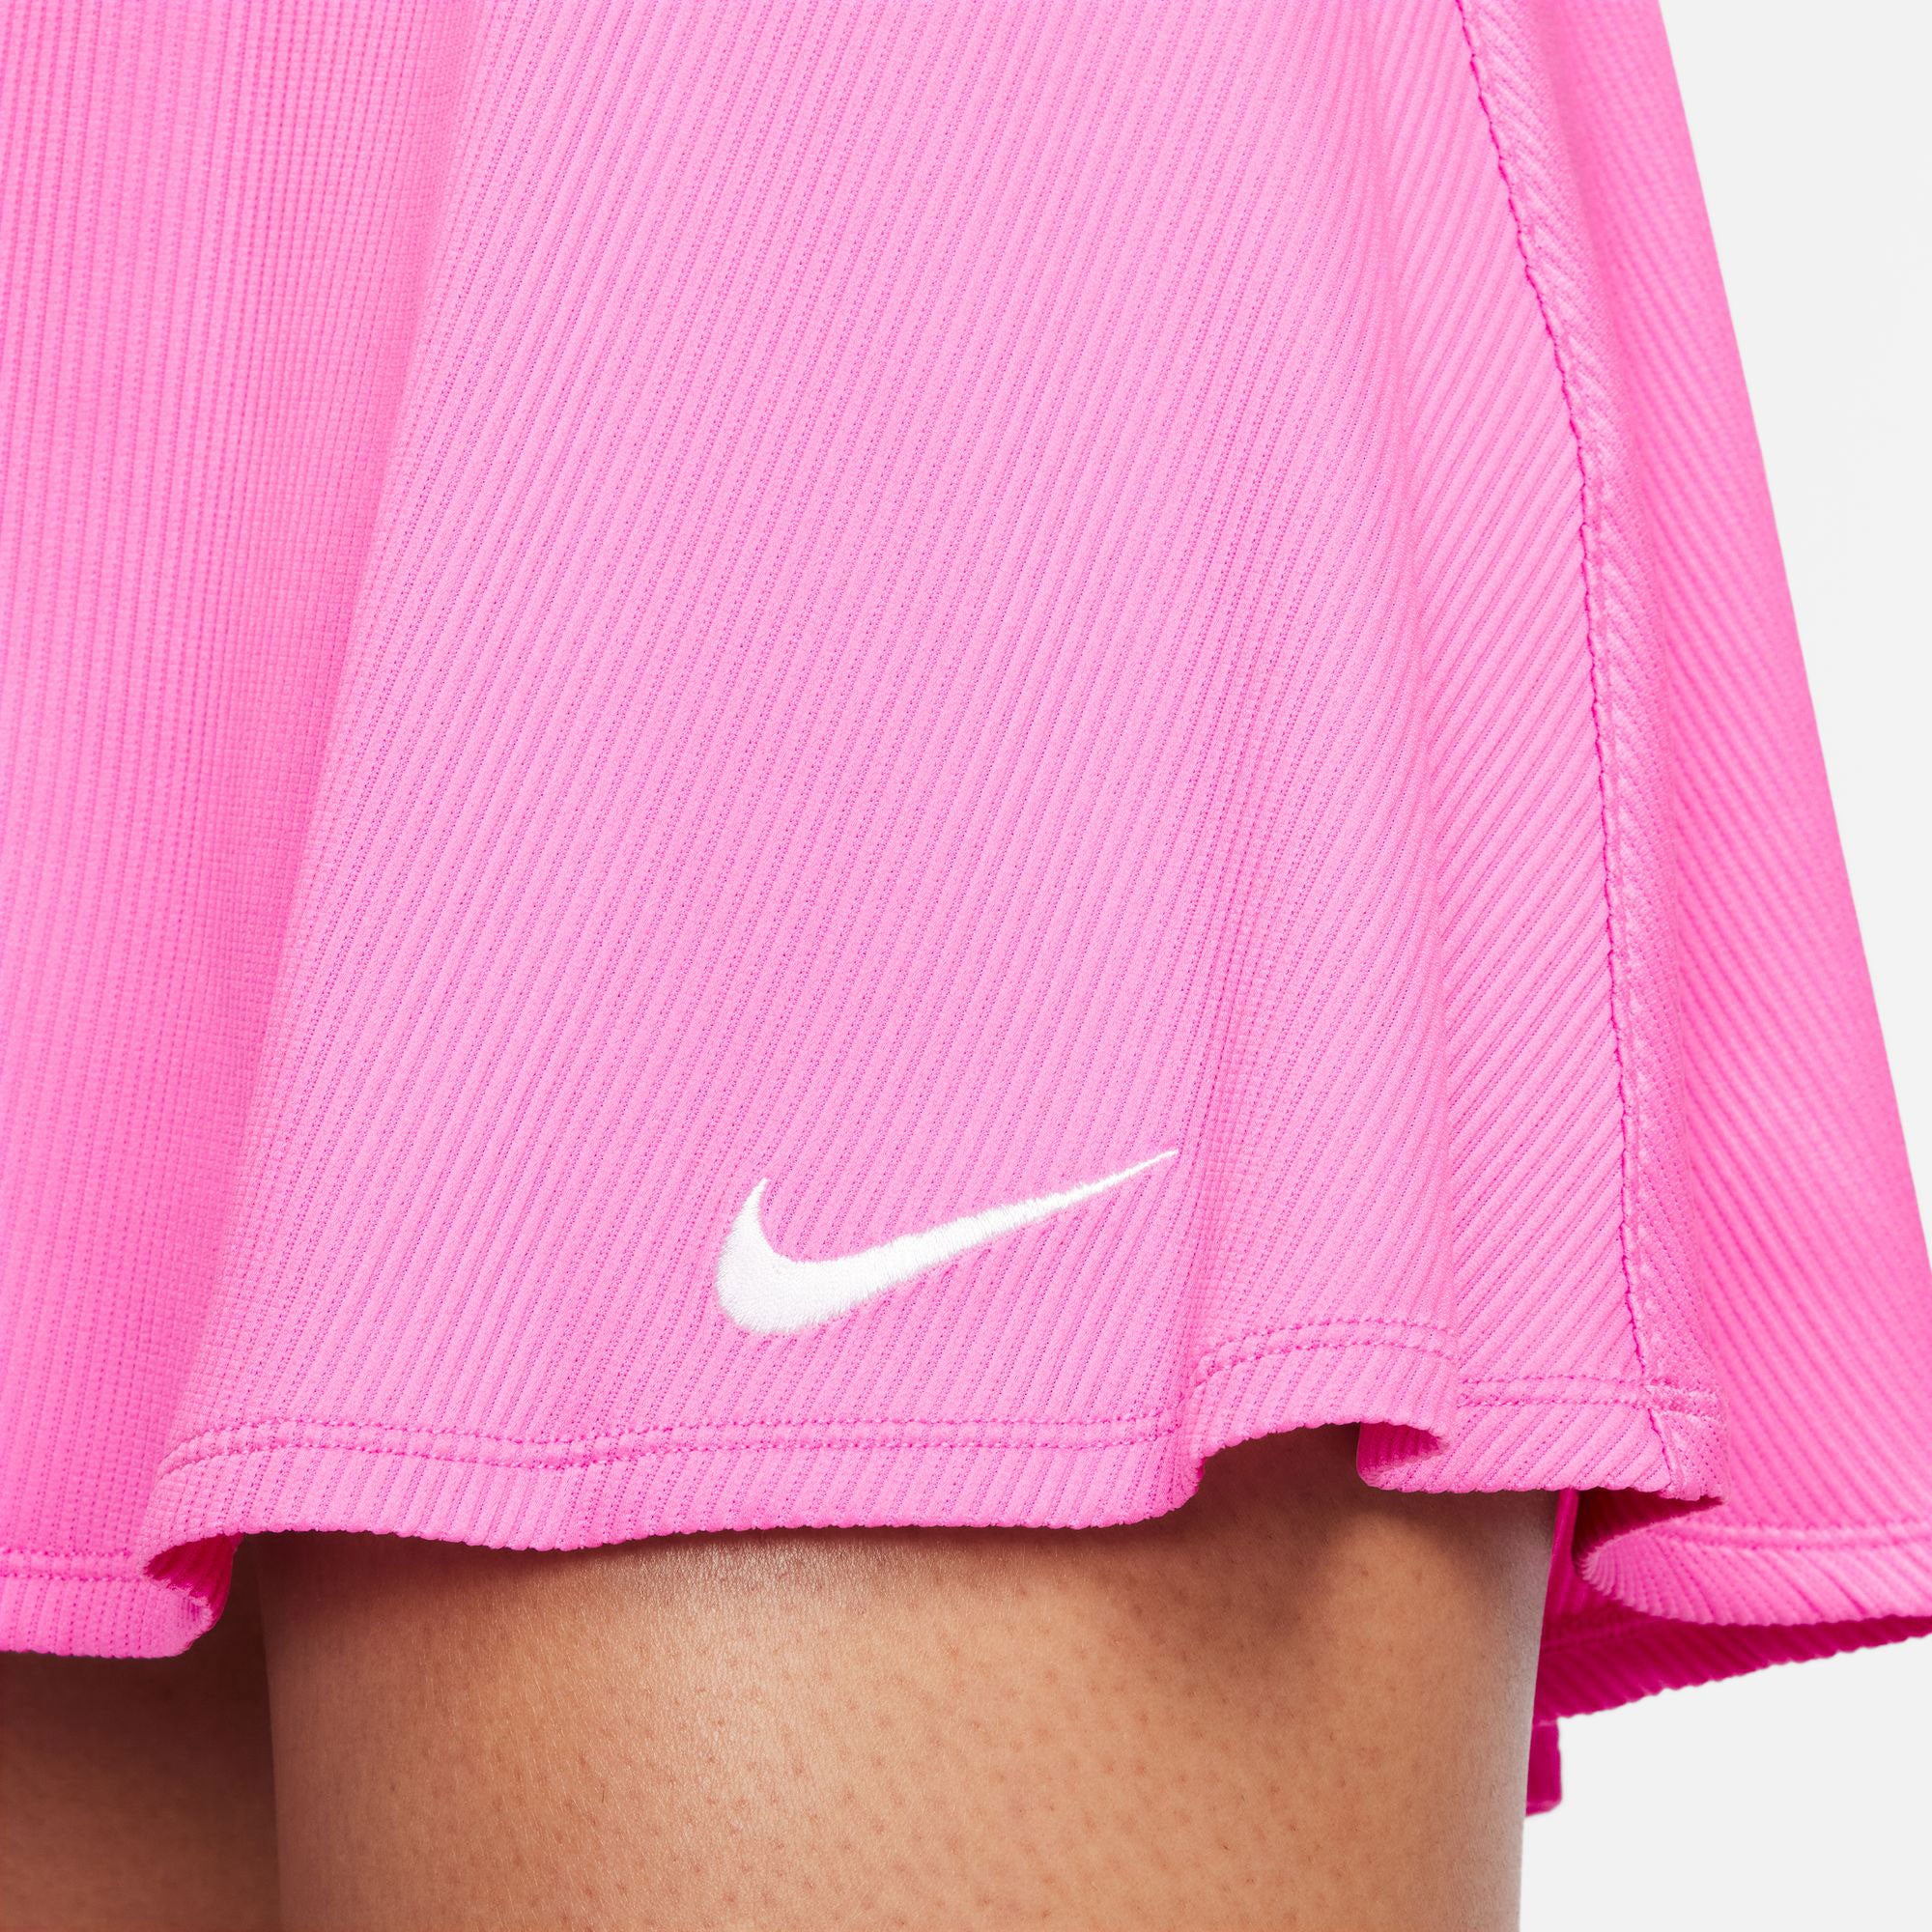 Nike Advantage Women's Dri-FIT Regular Tennis Skirt - Pink (5)